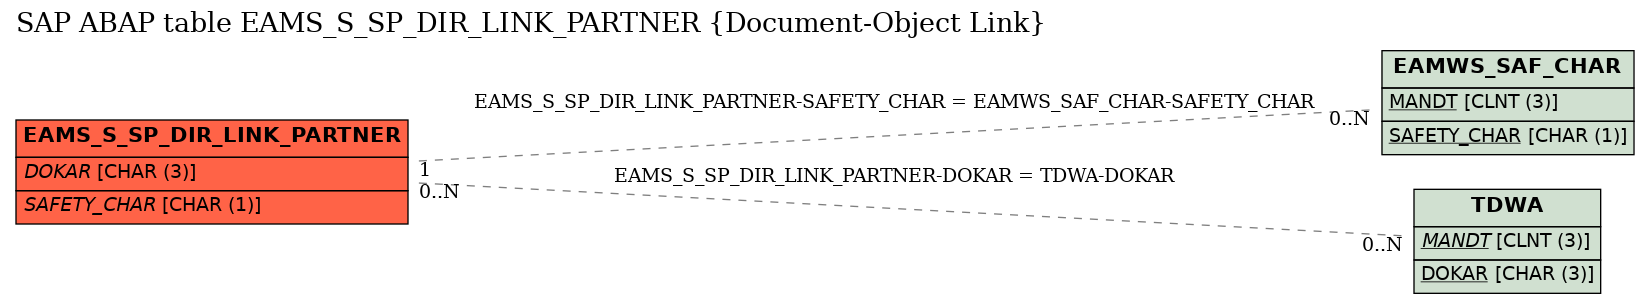 E-R Diagram for table EAMS_S_SP_DIR_LINK_PARTNER (Document-Object Link)